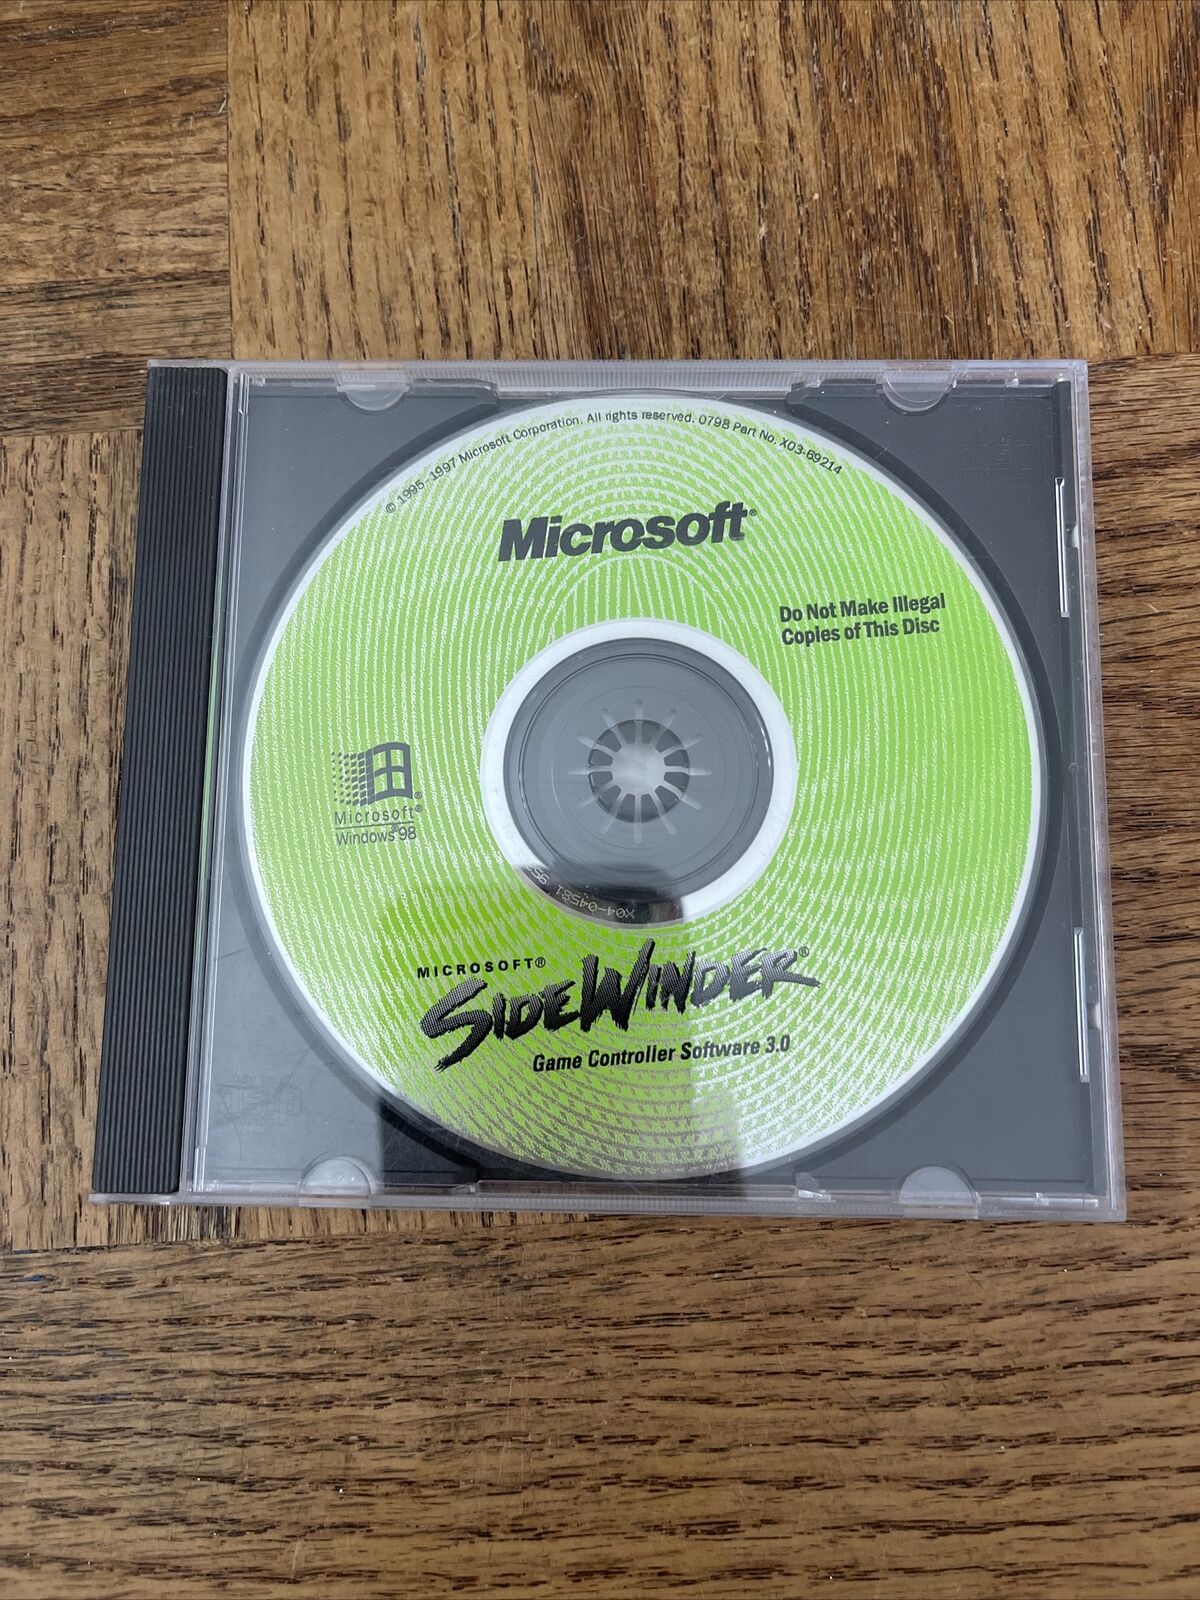 Microsoft SideWinder PC Software